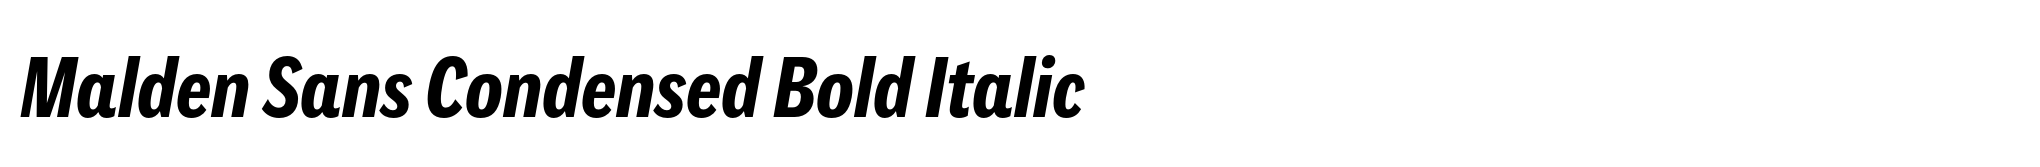 Malden Sans Condensed Bold Italic image